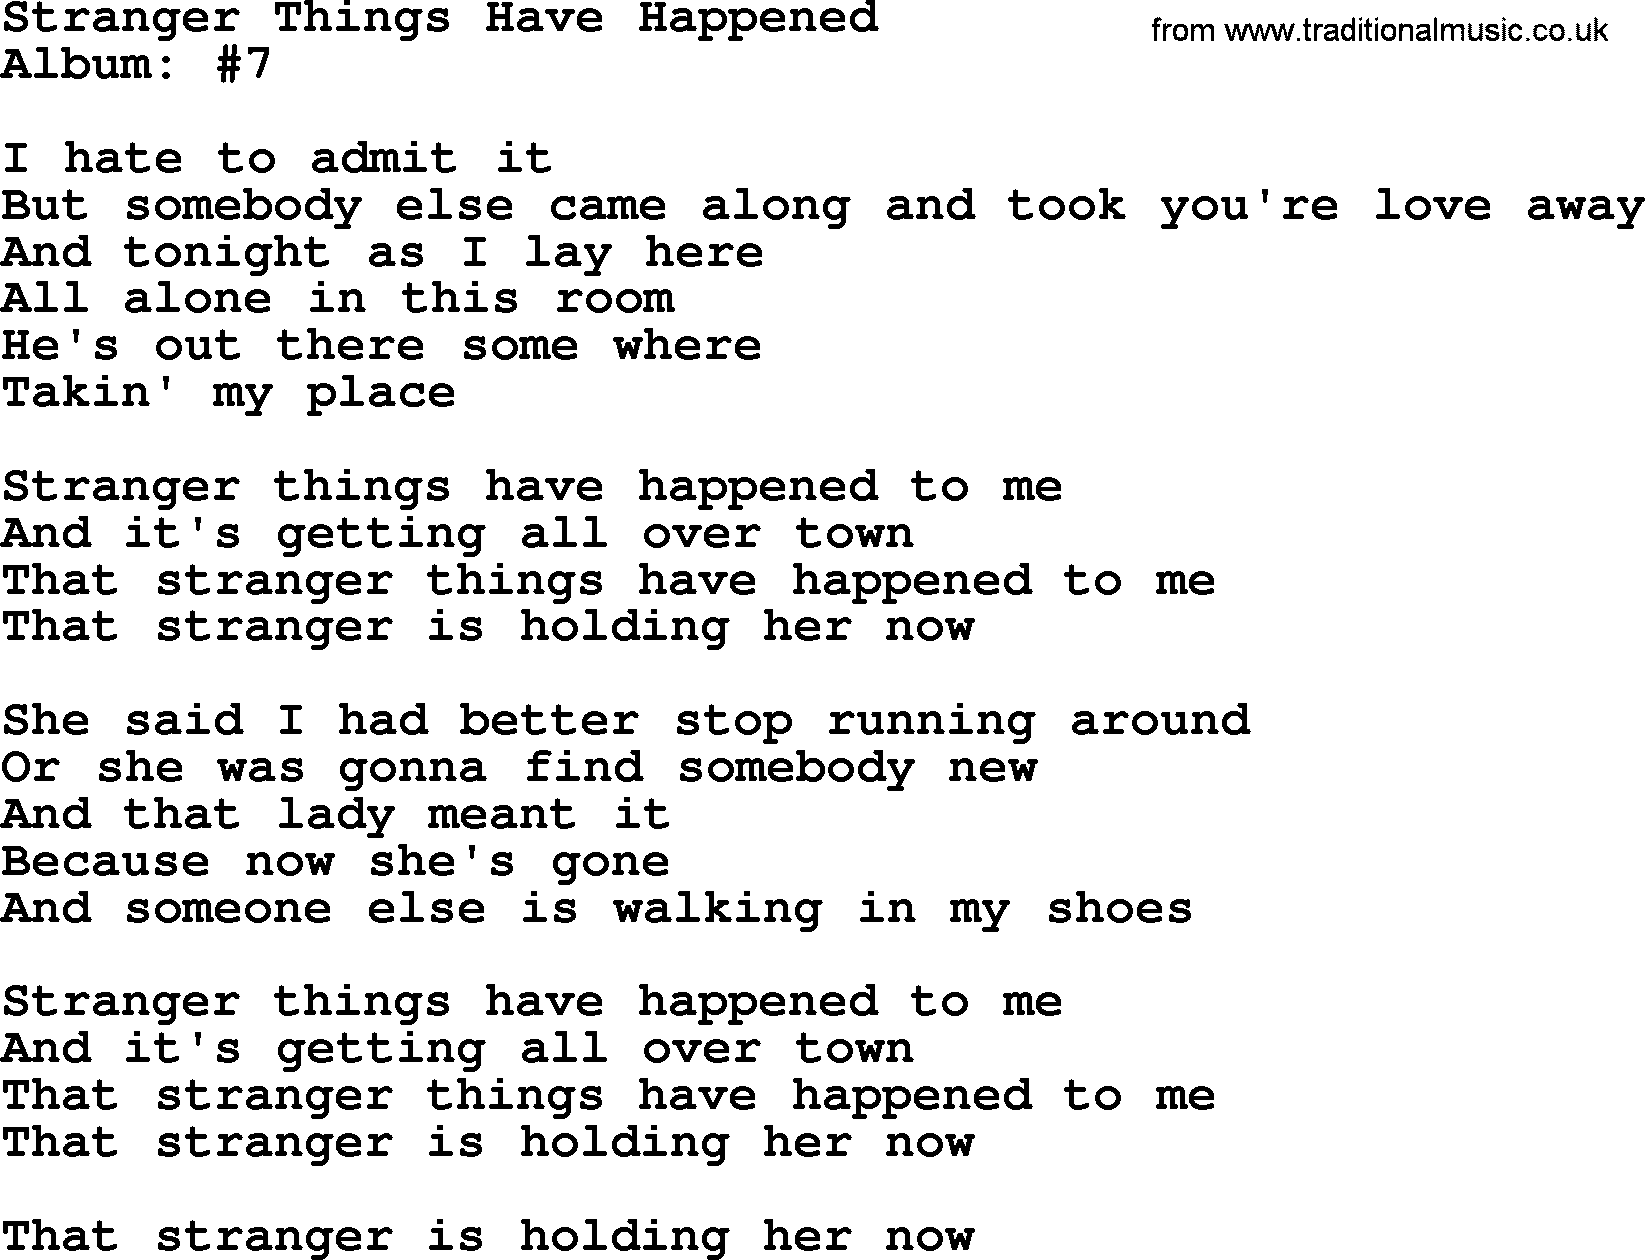 George Strait song: Stranger Things Have Happened, lyrics